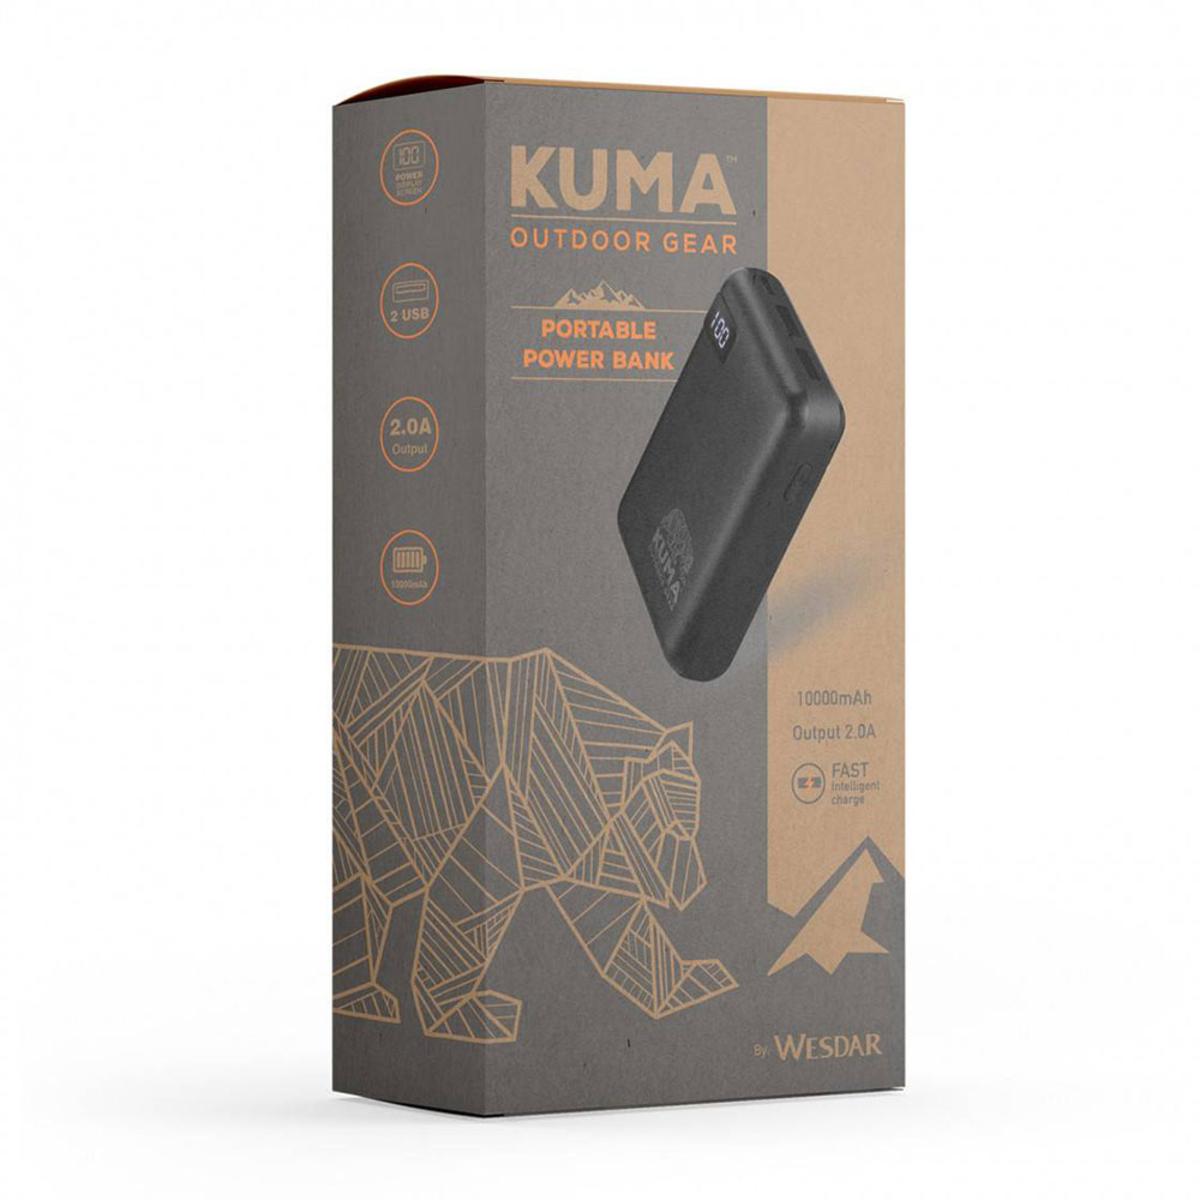 KUMA Outdoor Gear 10000mAh Portable Power Bank - Black